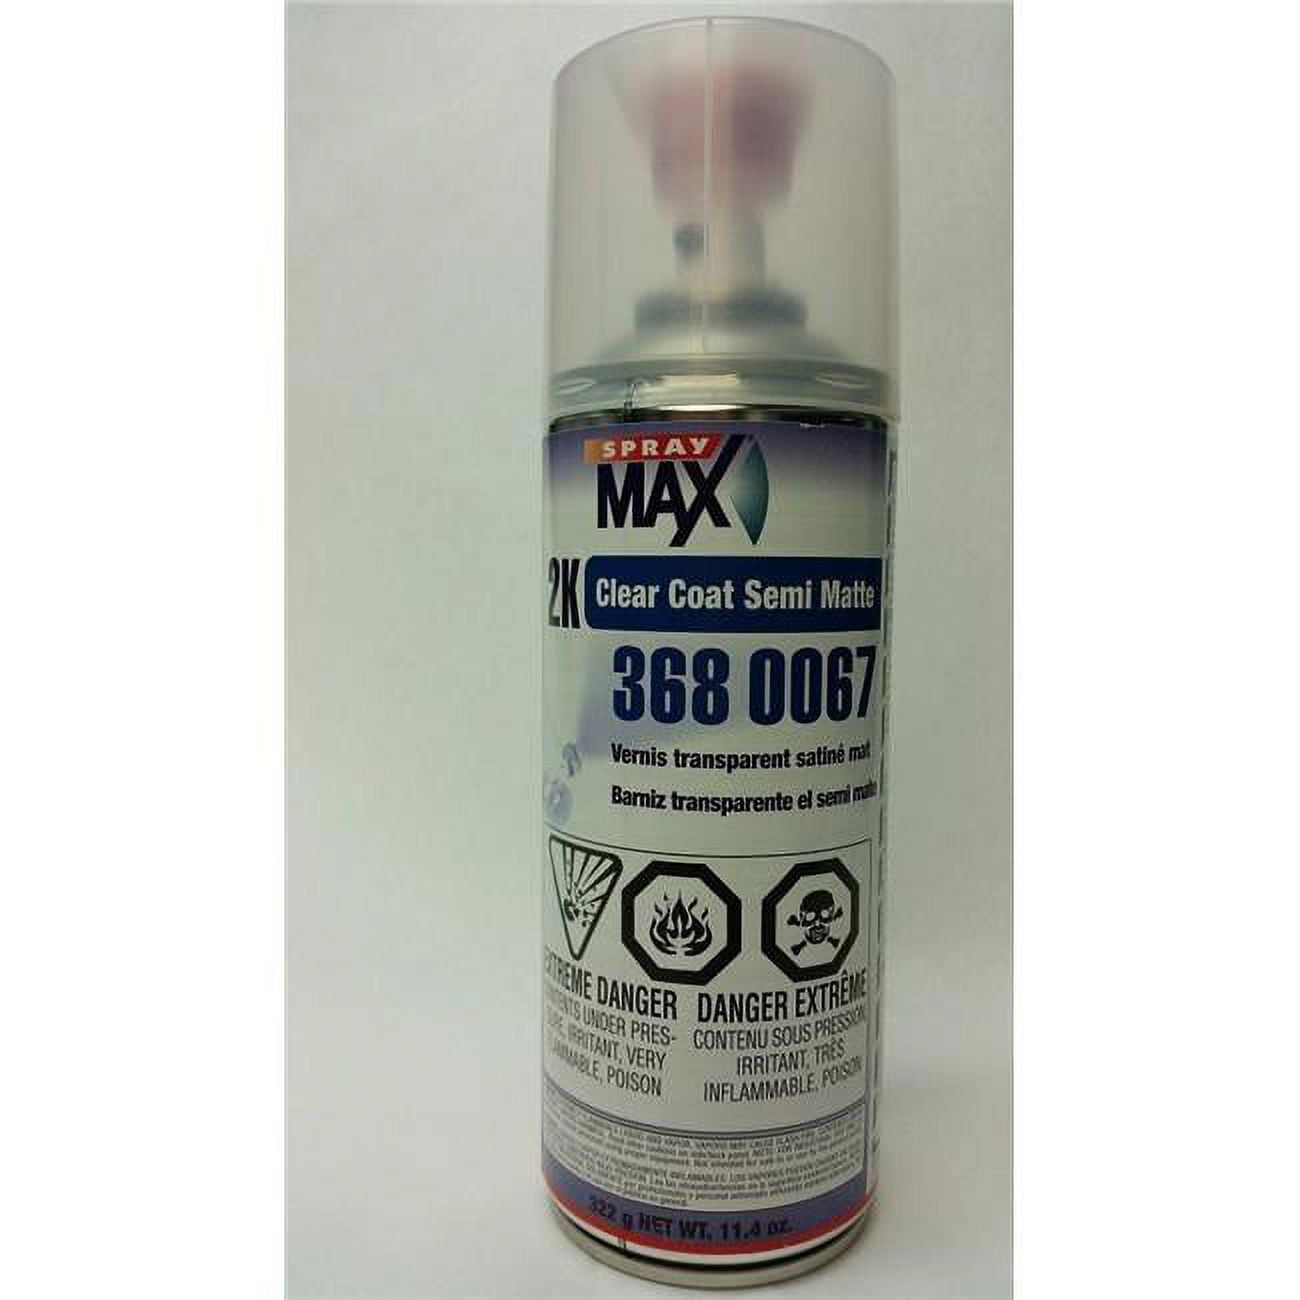 Spray Max 2K Matte Finish Clearcoat, SPM-3680065 – 66 Auto Color